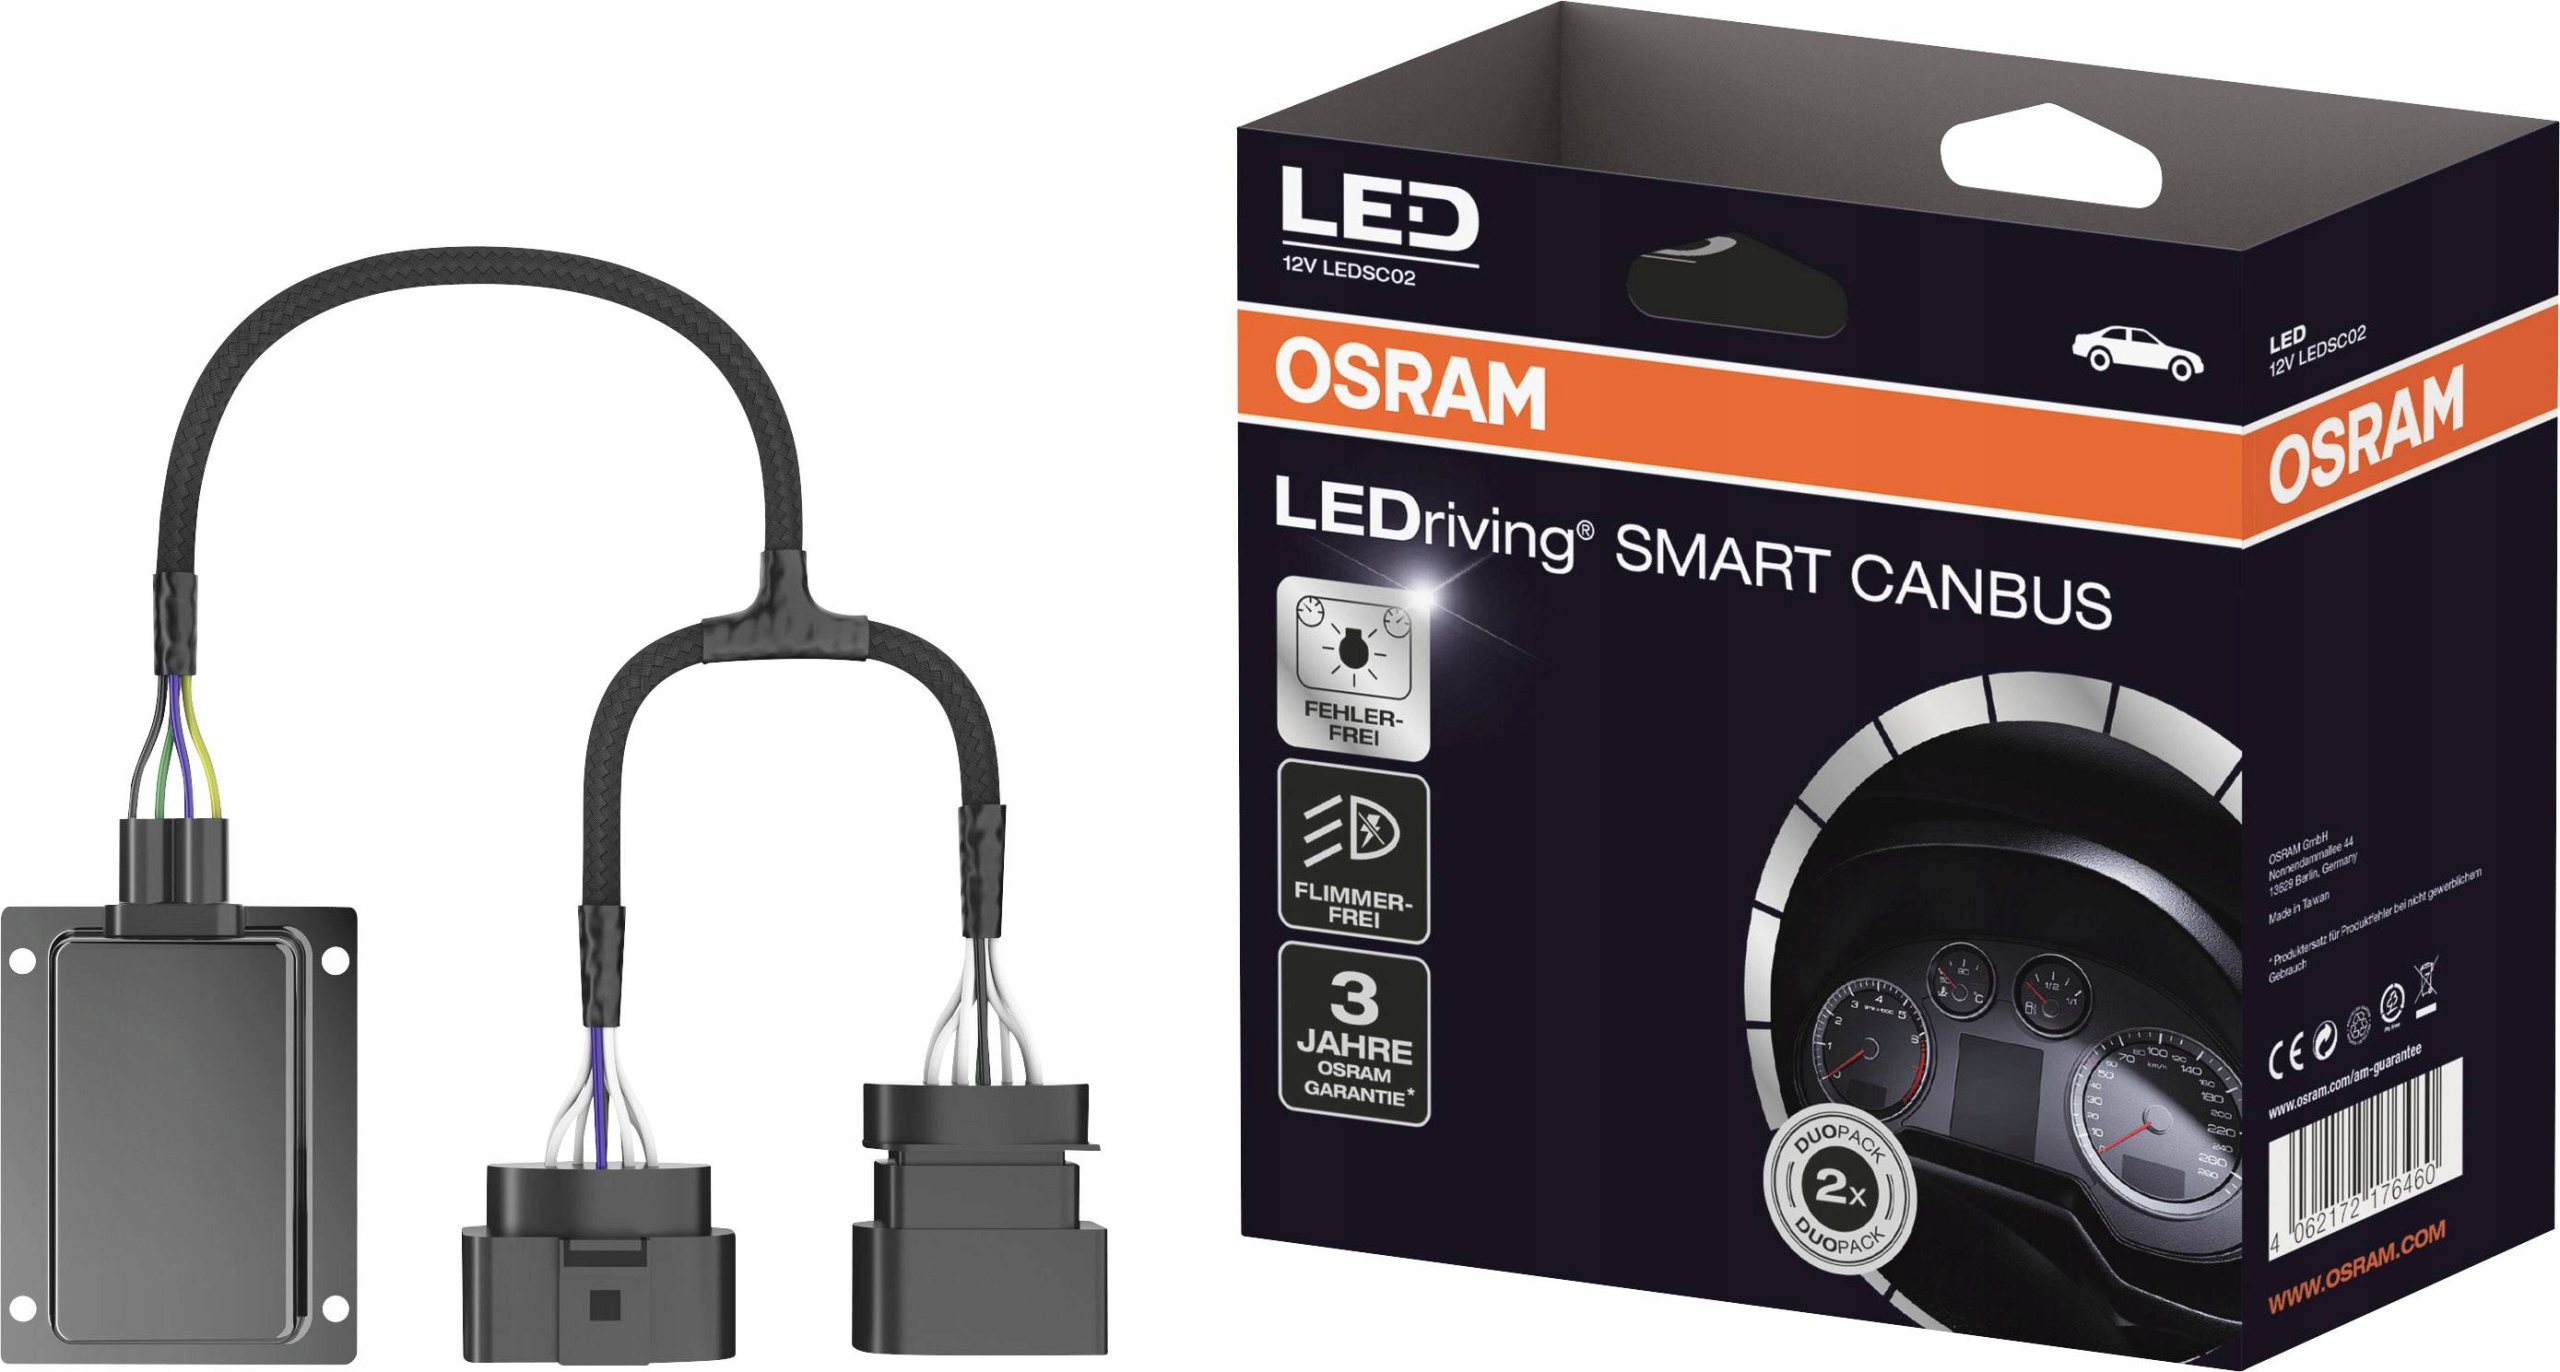 OSRAM LEDriving SMART CANBUS LEDSC02-1 + Adapter 64210DA05 VW